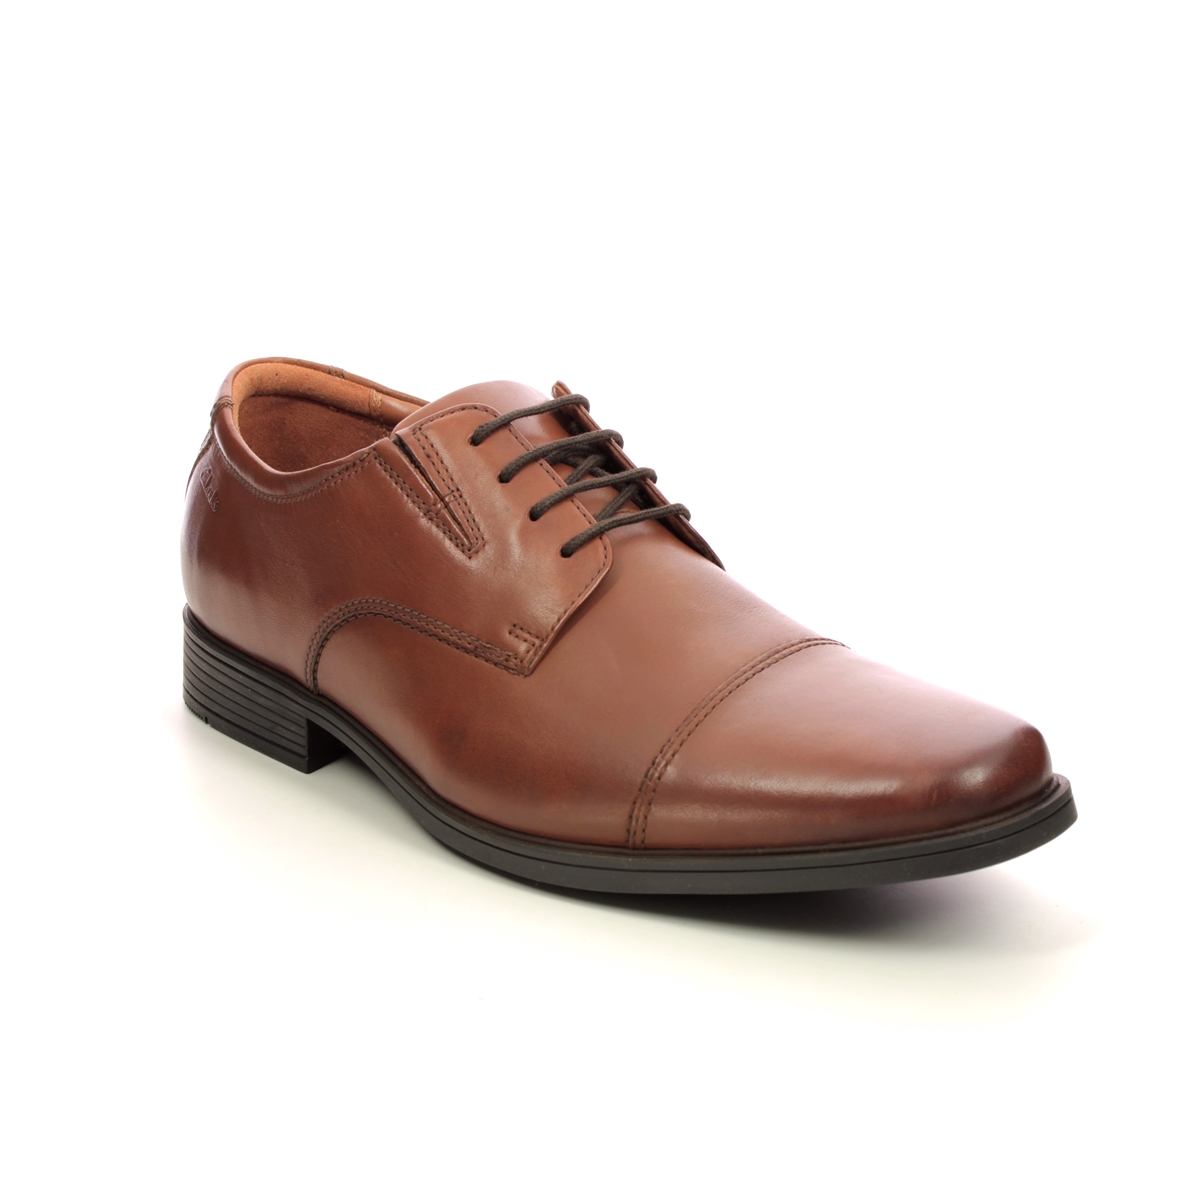 Clarks Tilden Cap Dark Tan Mens Formal Shoes 300968H In Size 7 In Plain Dark Tan H Width Fitting Extra Wide